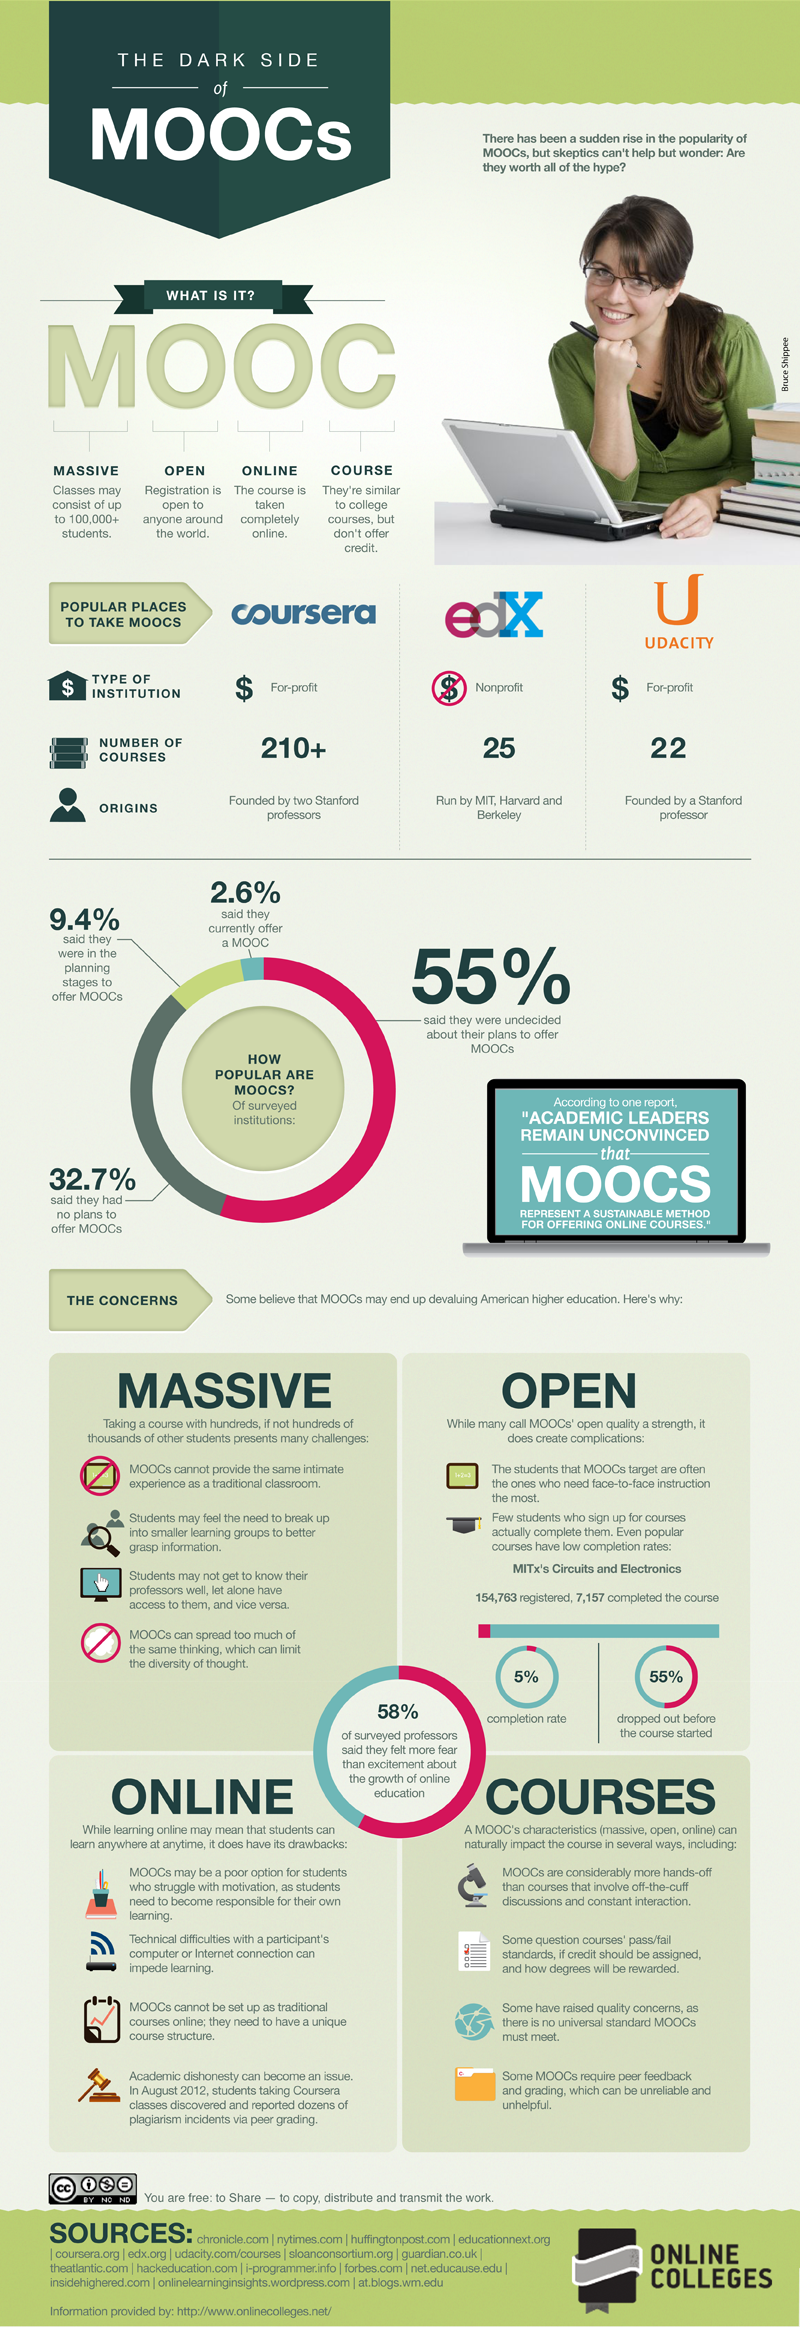 The Dark Side of MOOCs